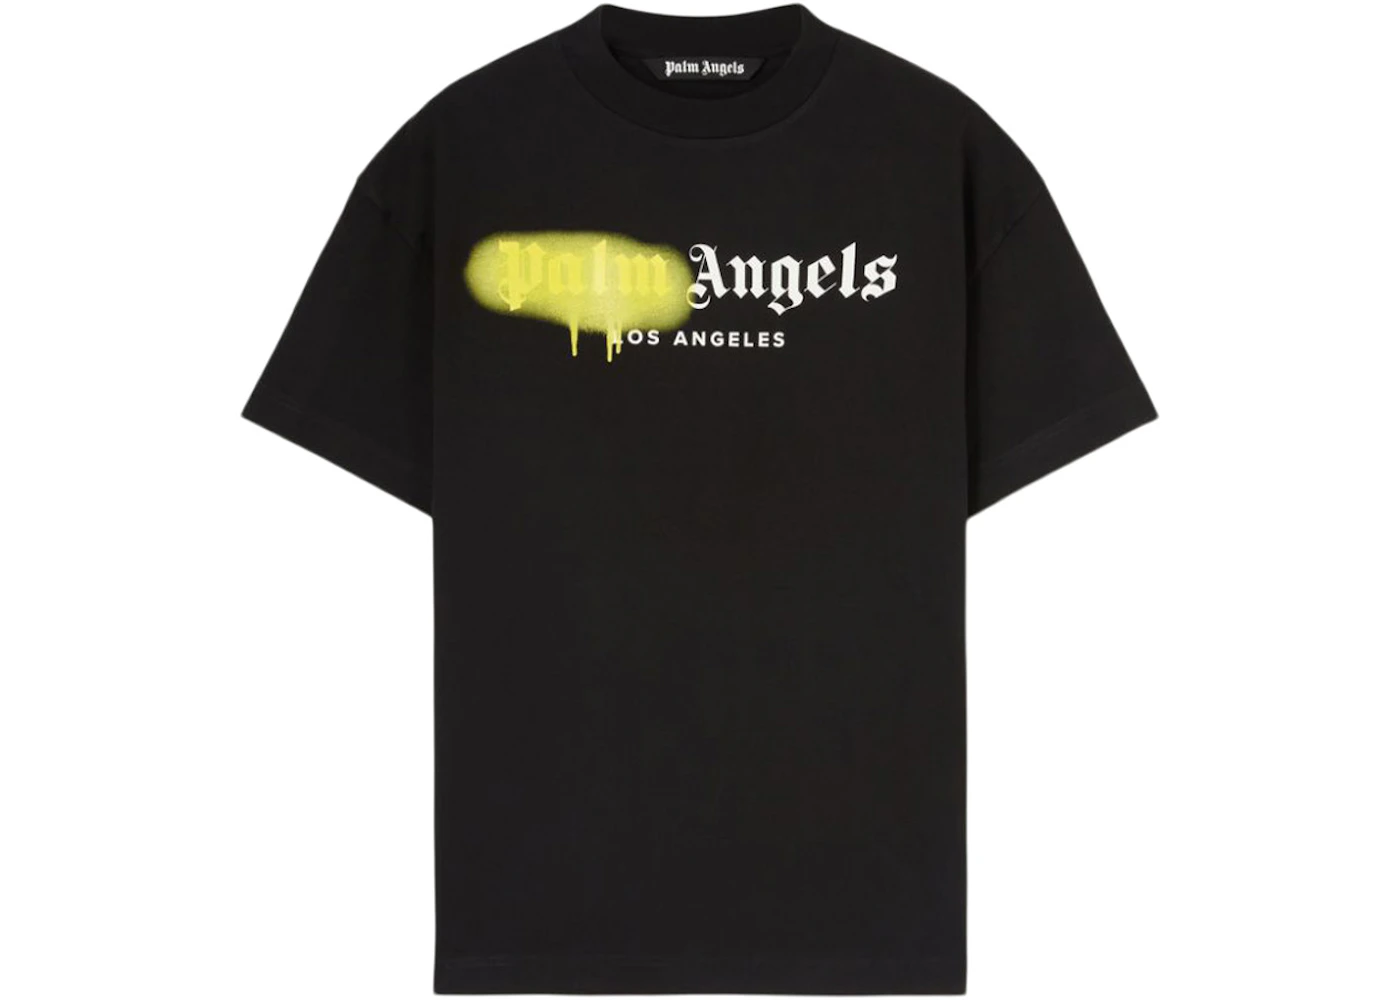 la angels tshirt